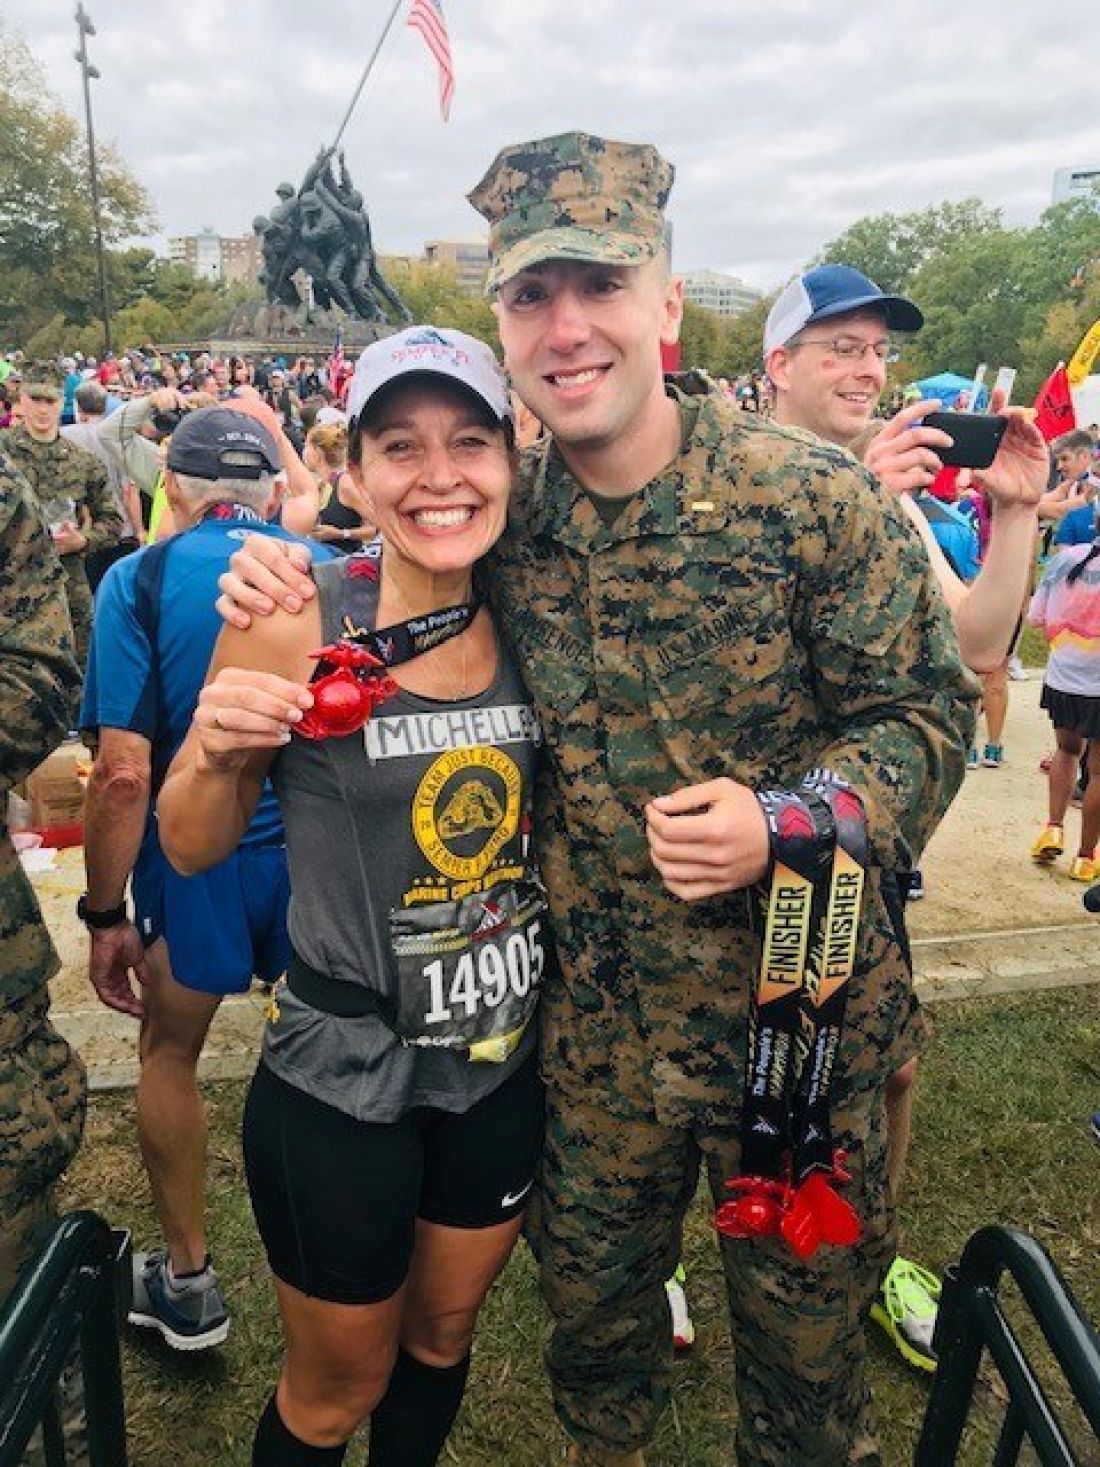 Results - Marine Corps Marathon